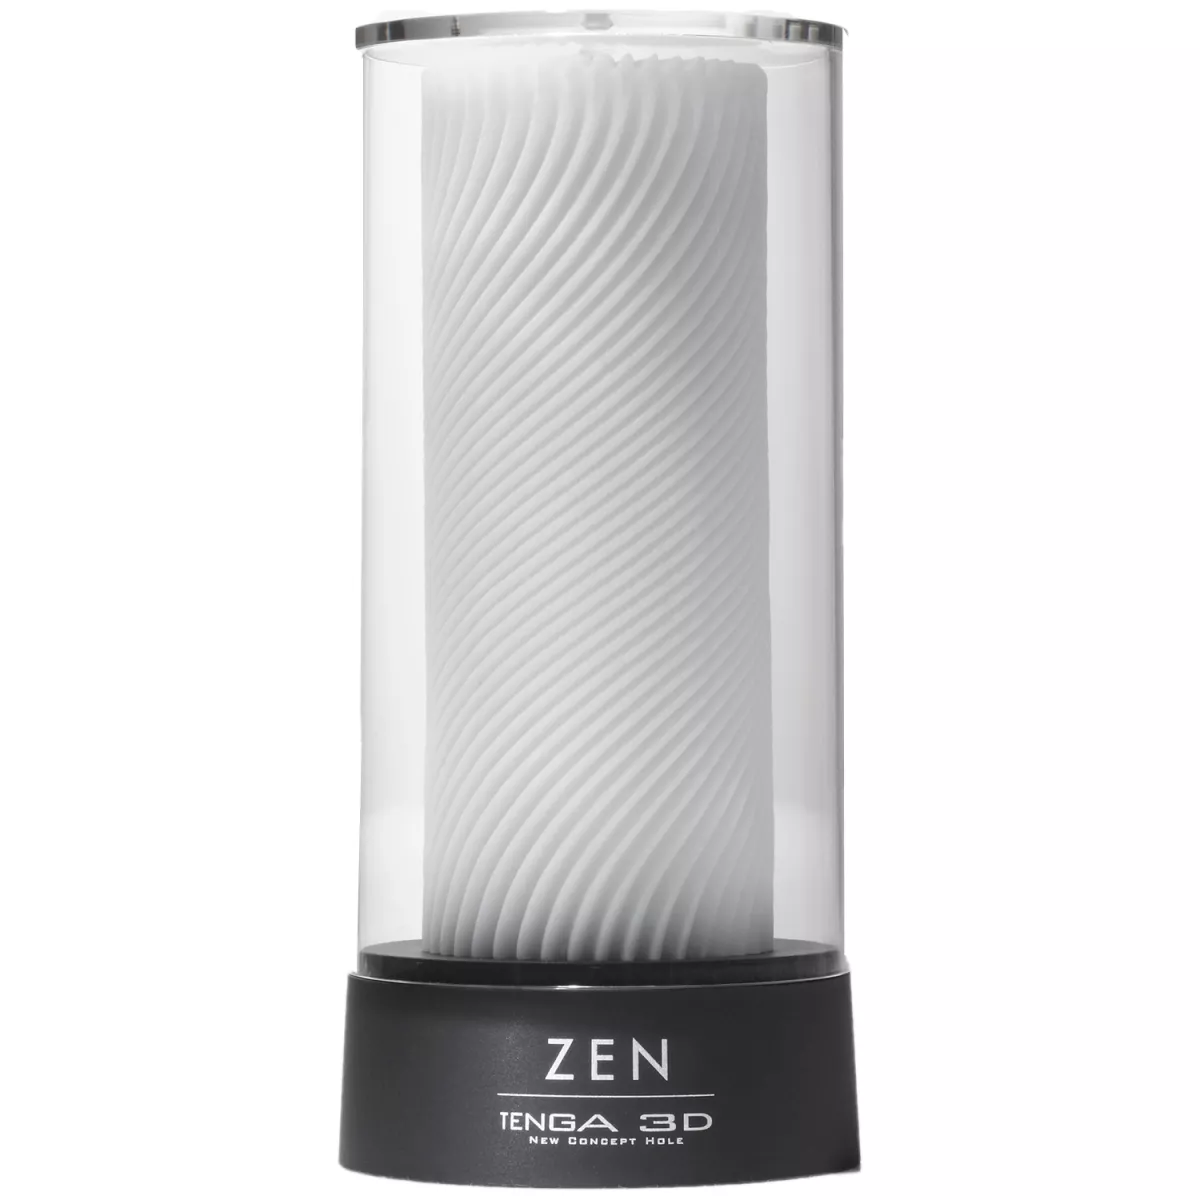 #2 - TENGA 3D Zen Onaniprodukt       - Hvid